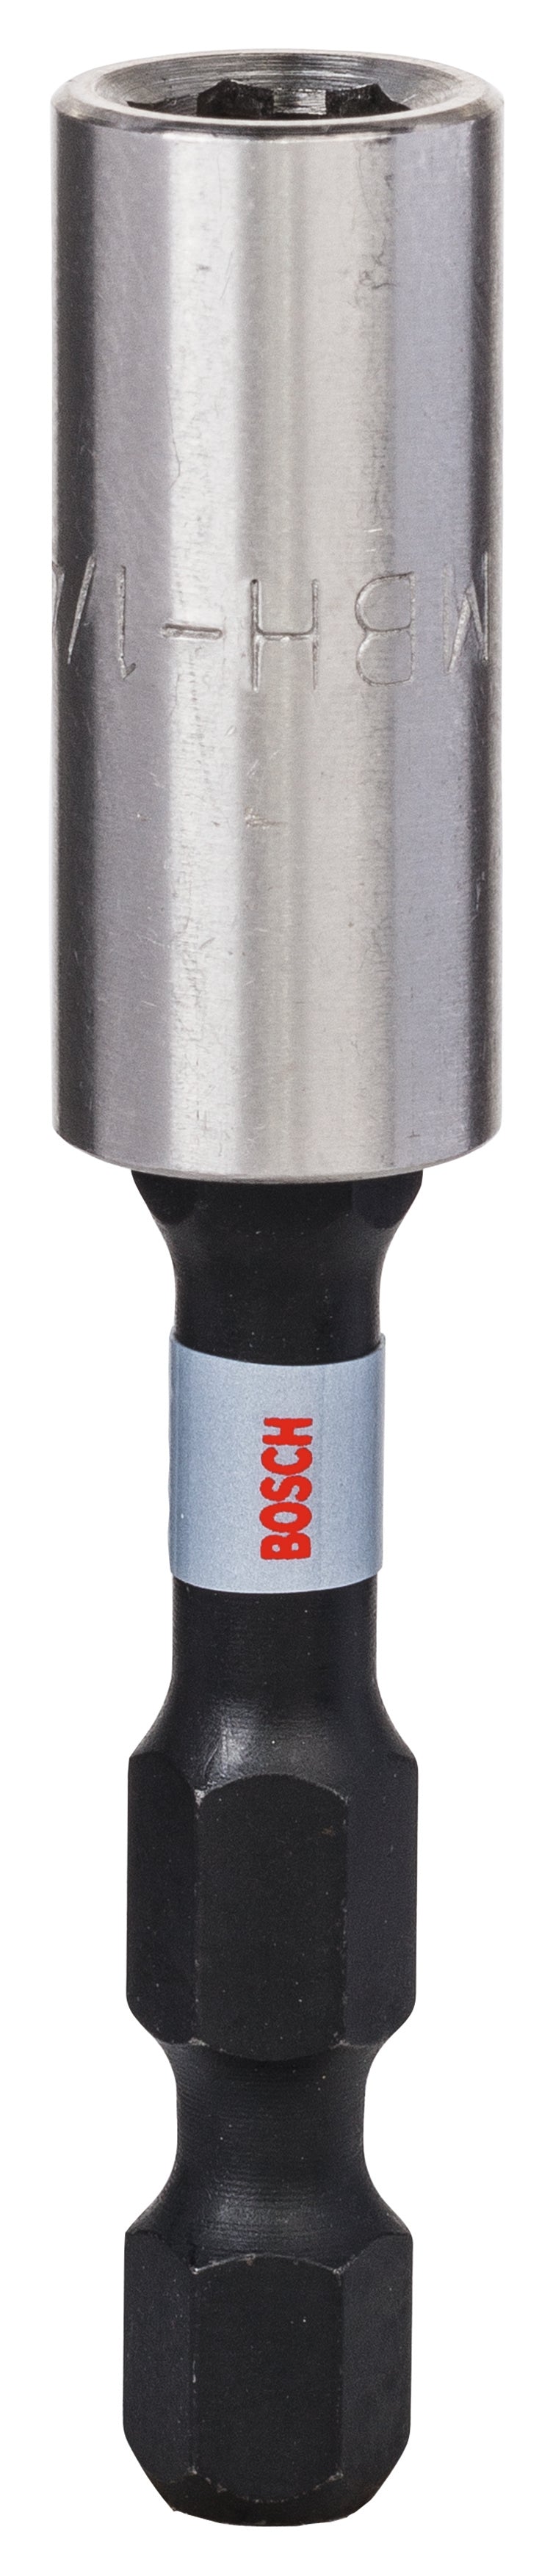 Bosch Professional Impact Universal Bit Holder with Permanent Magnet Pick & Clic - Standard